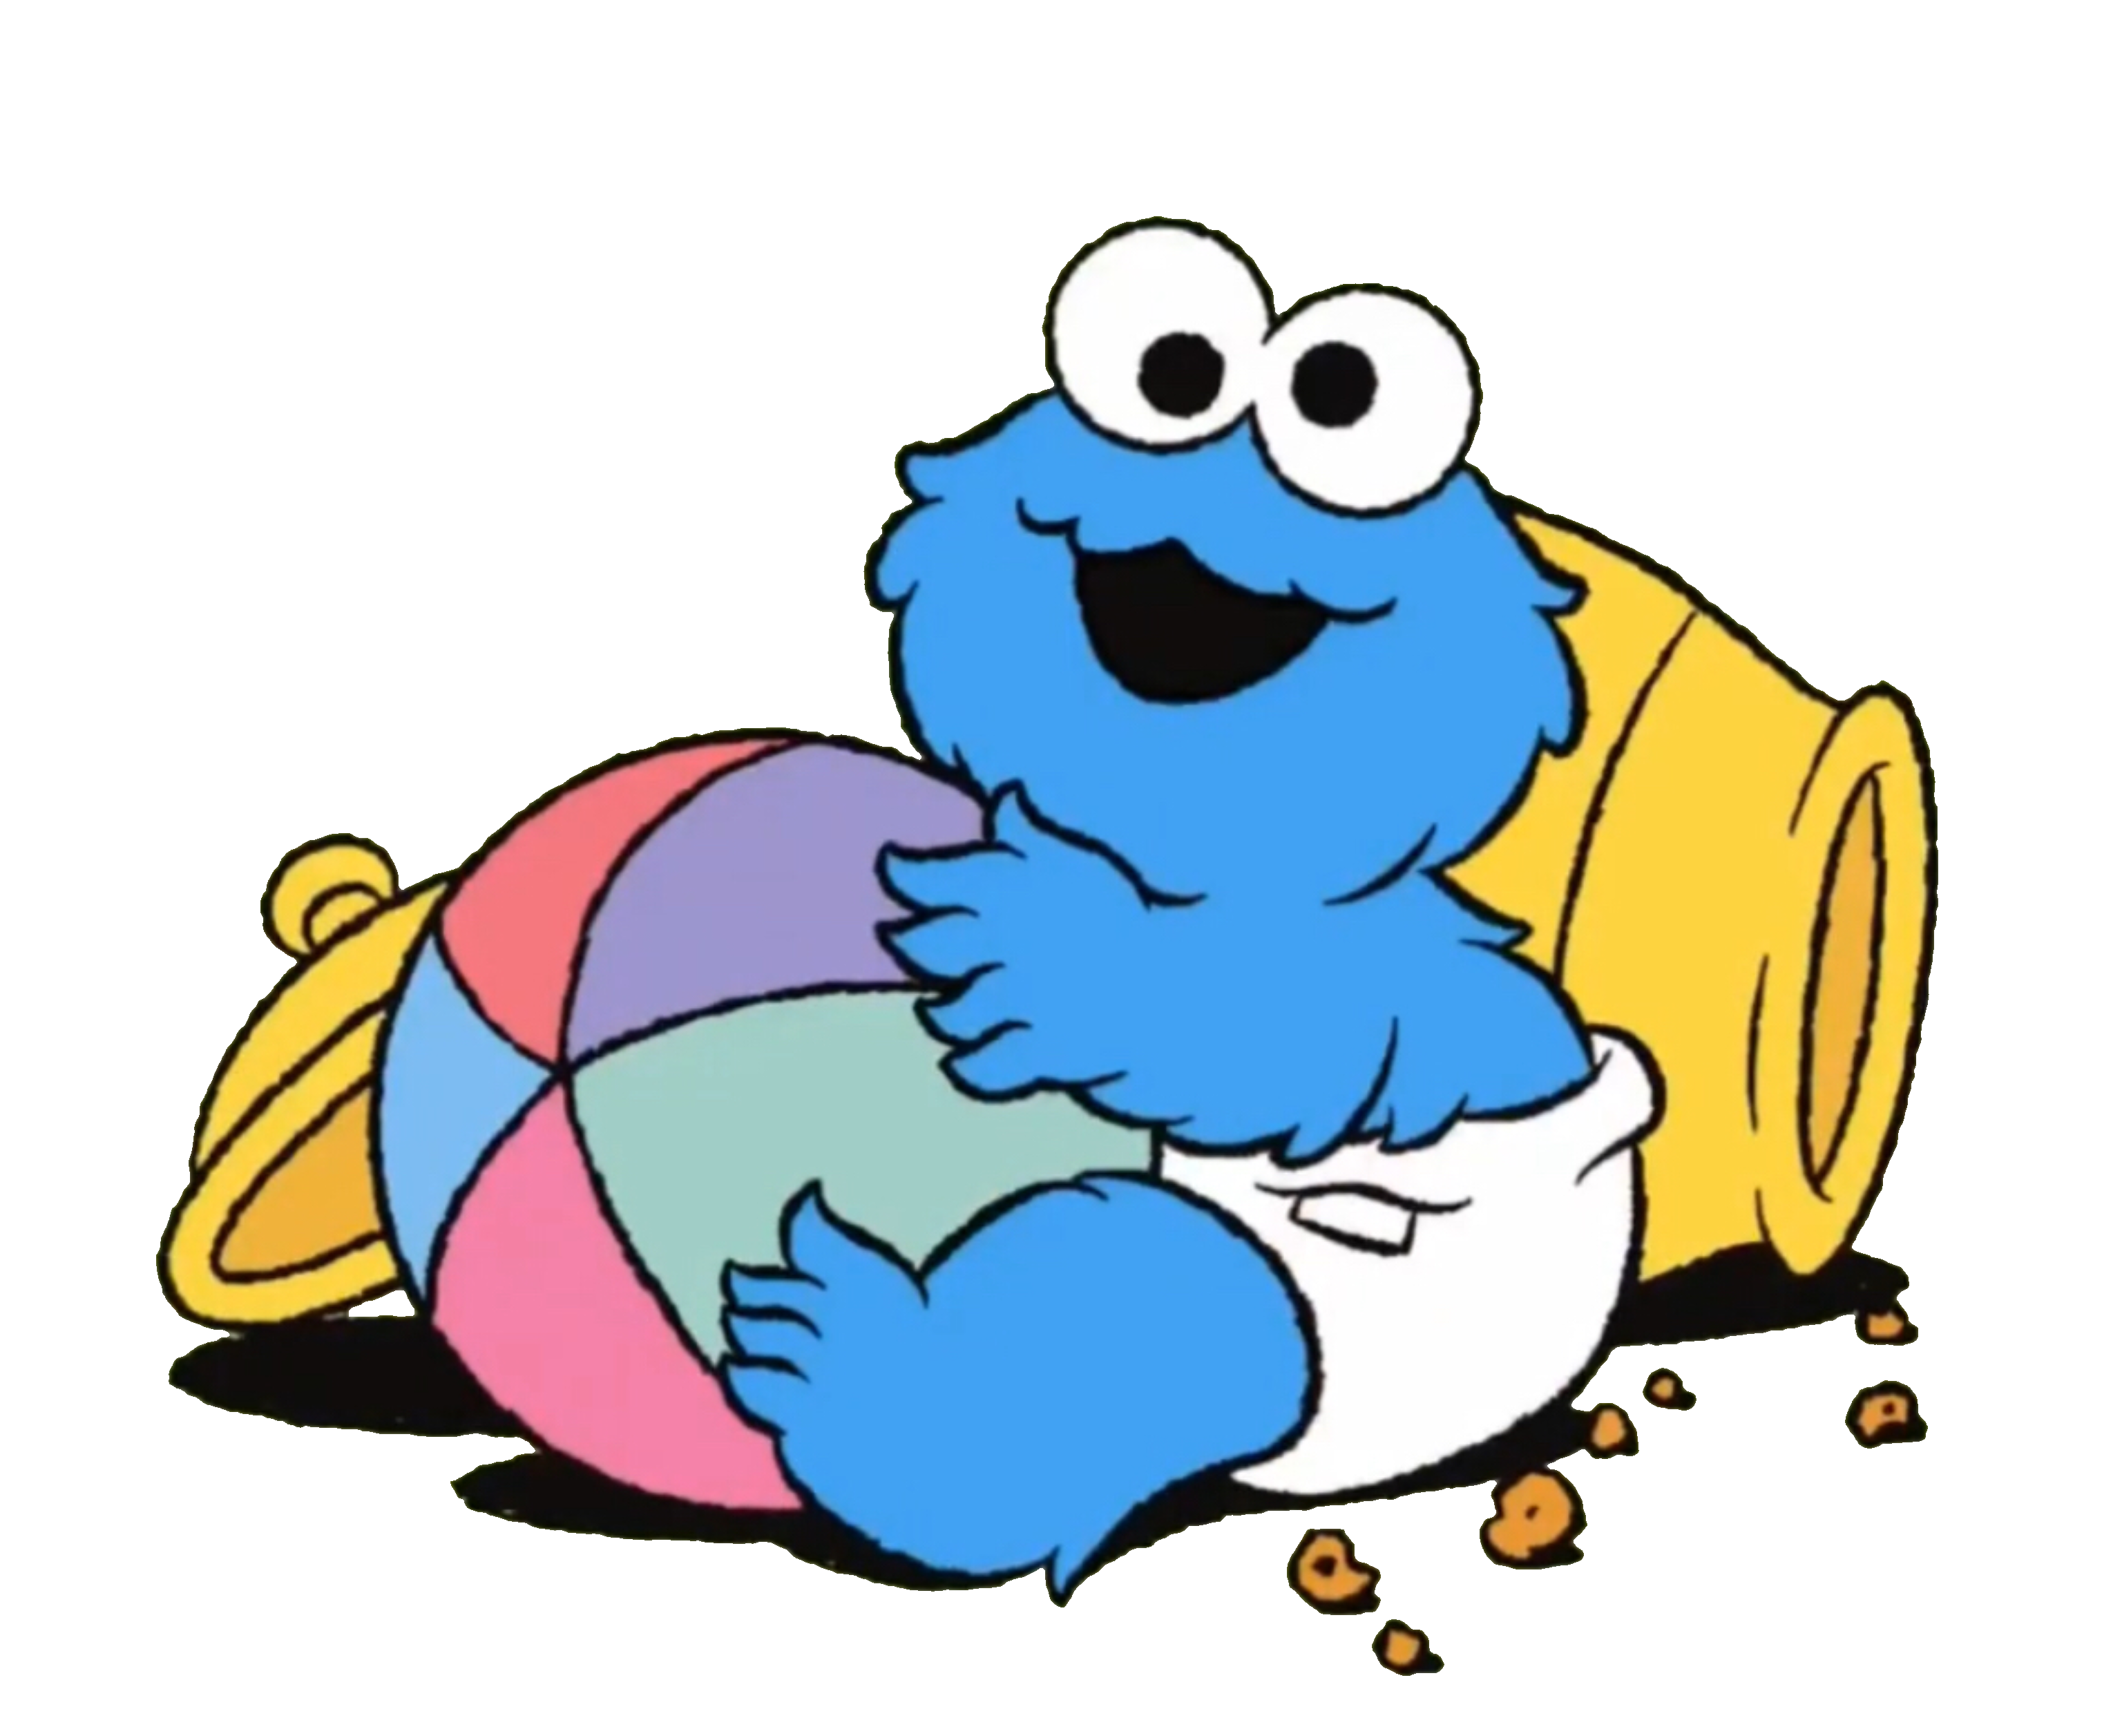 Baby Cookie Monster Clipart by mcdnalds2016 on DeviantArt